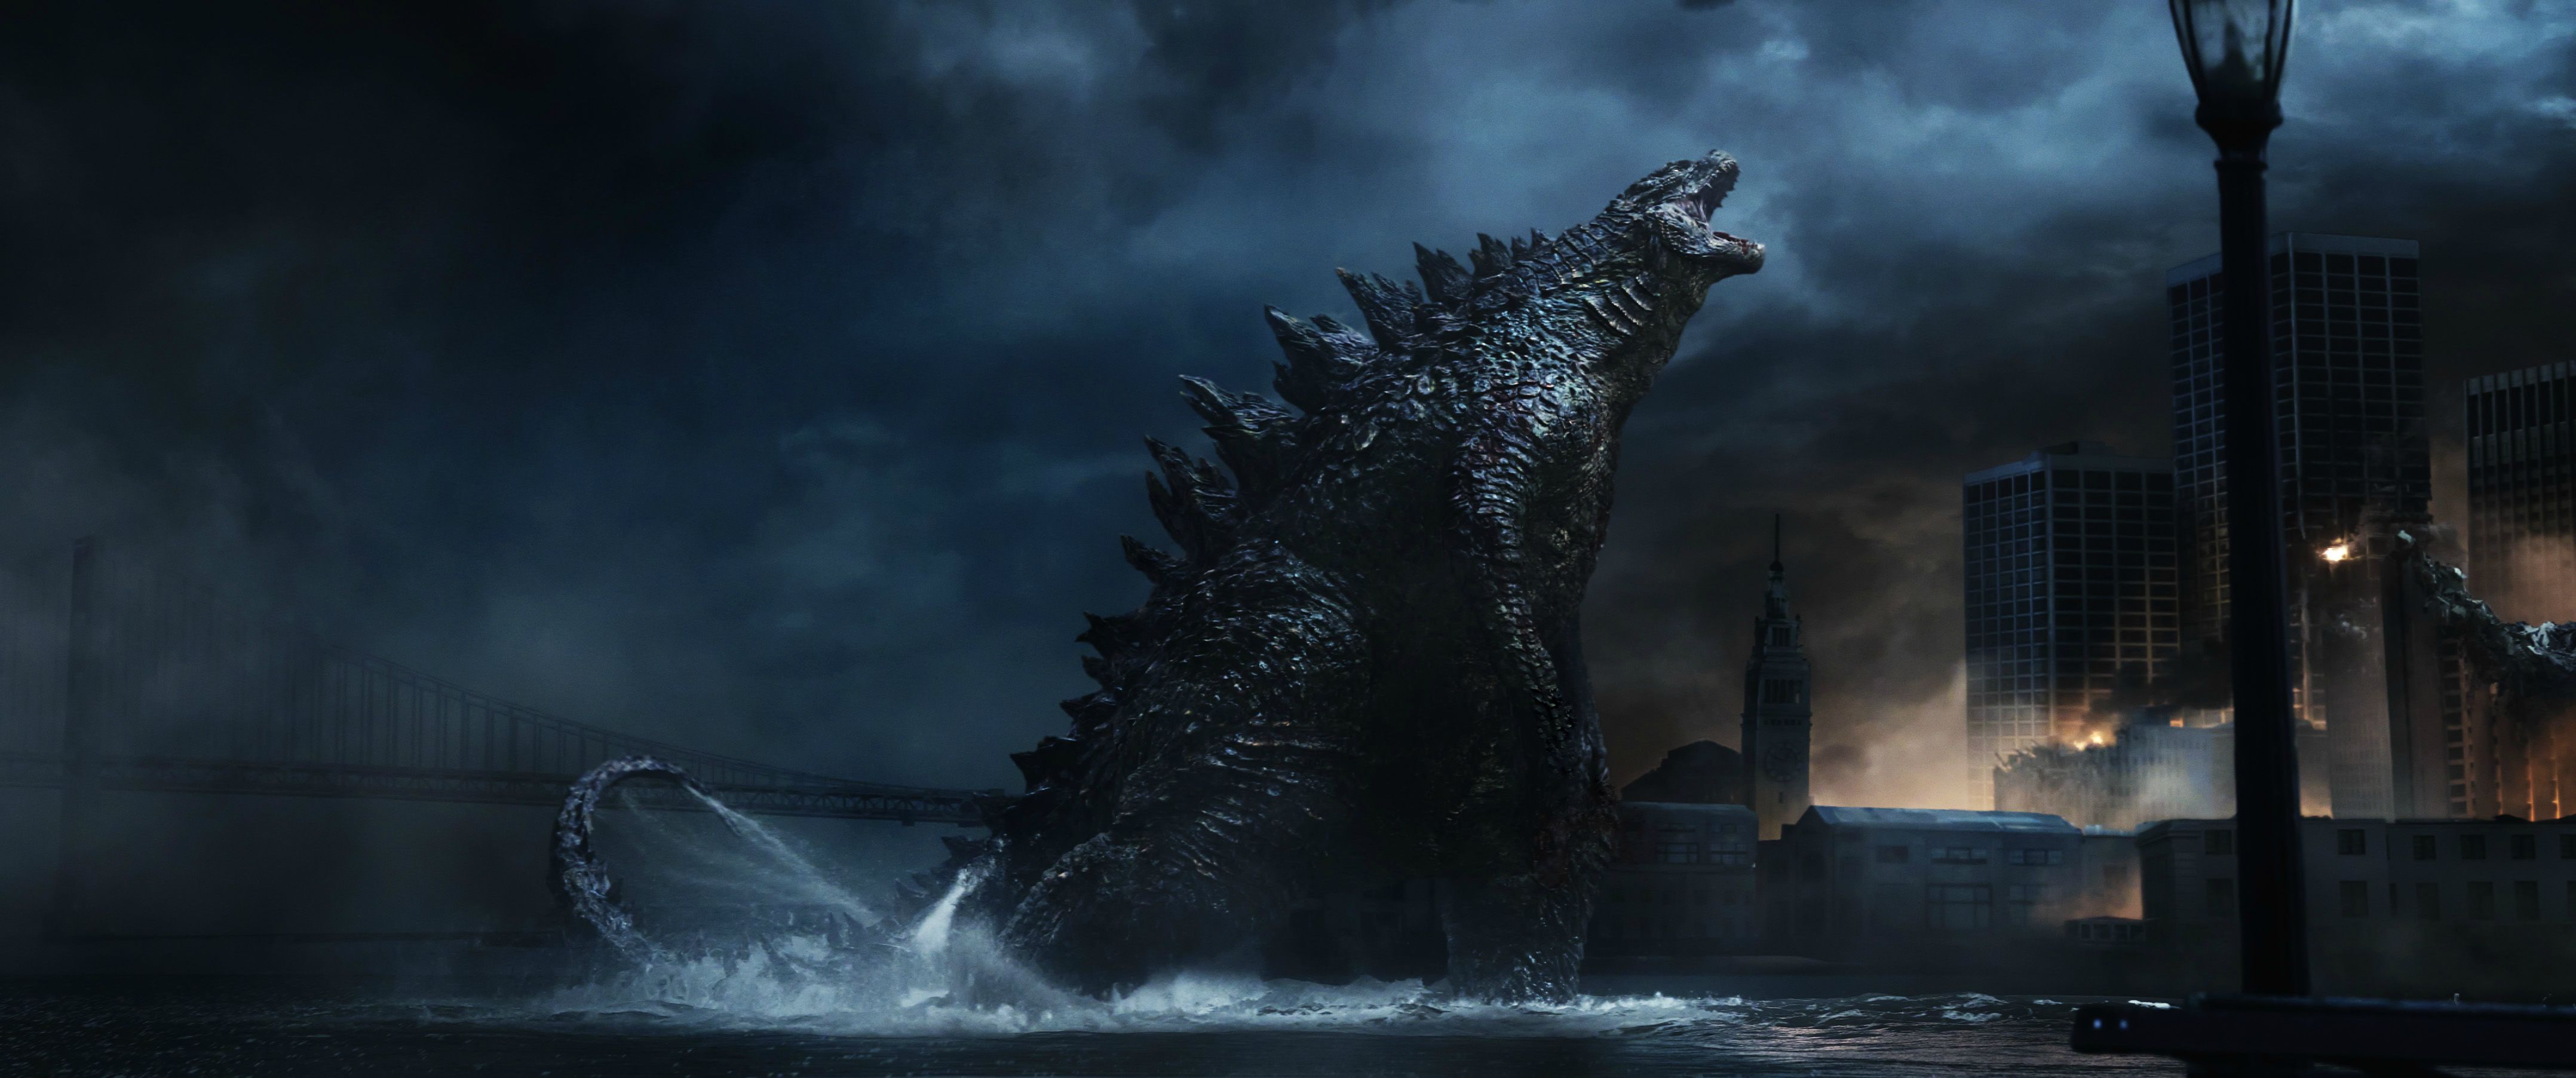 Télécharger des fonds d'écran Godzilla (2014) HD